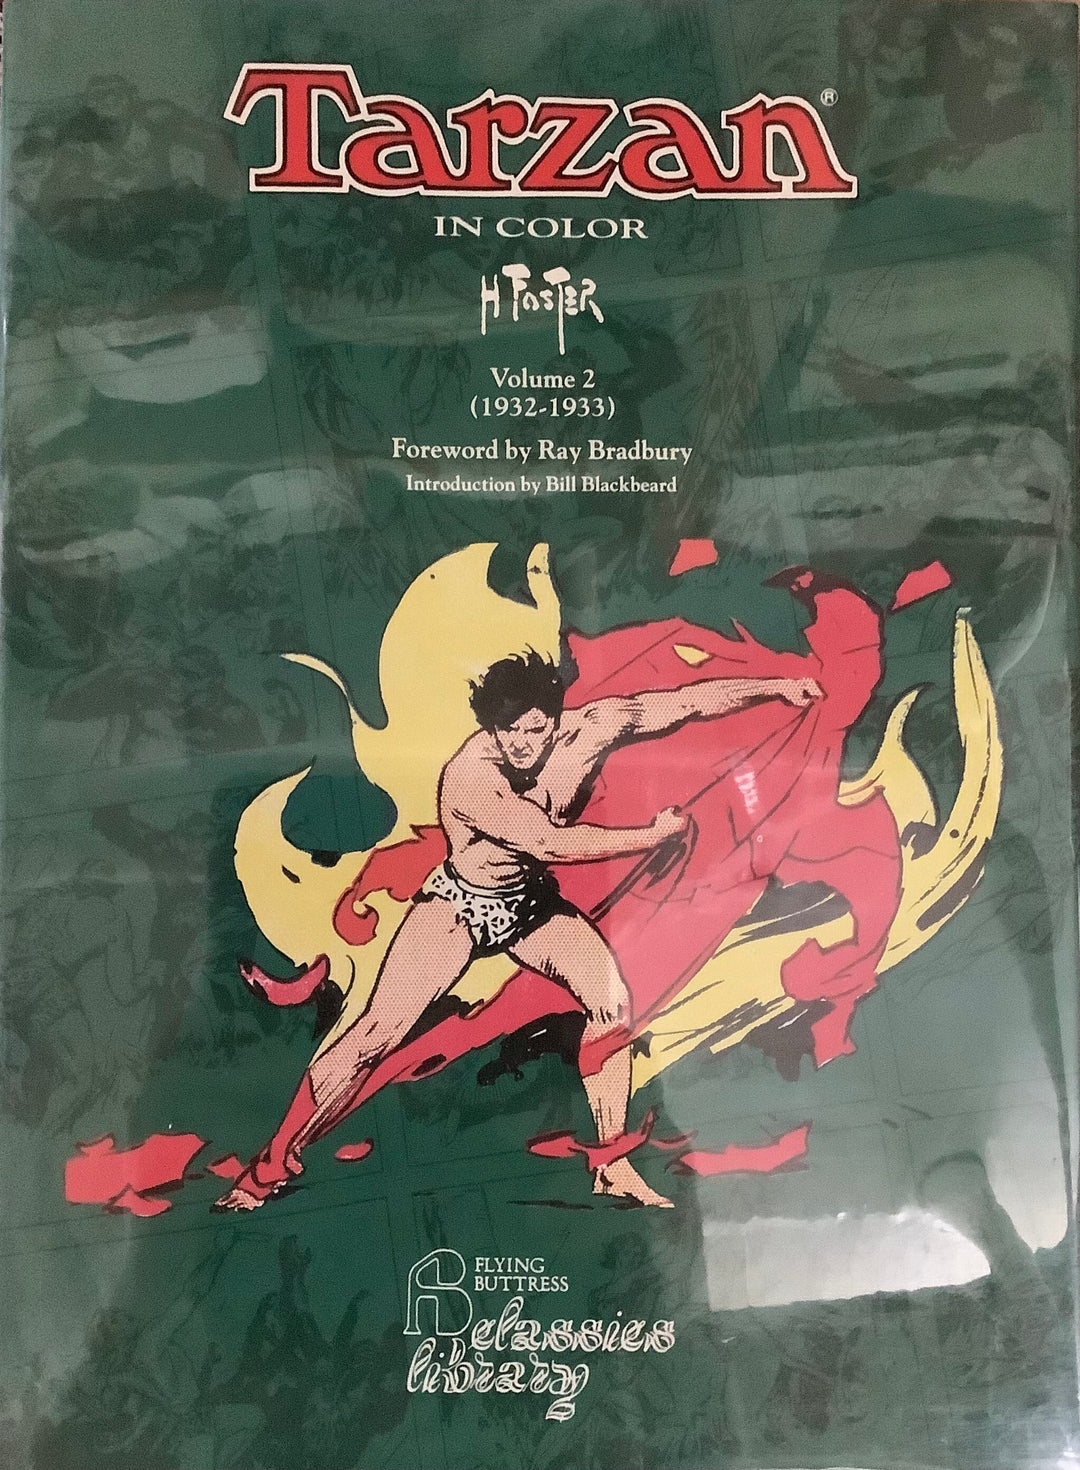 Tarzan in Color Vol # 2 (1932-1933) Hardcover Graphic Novel OXA-01